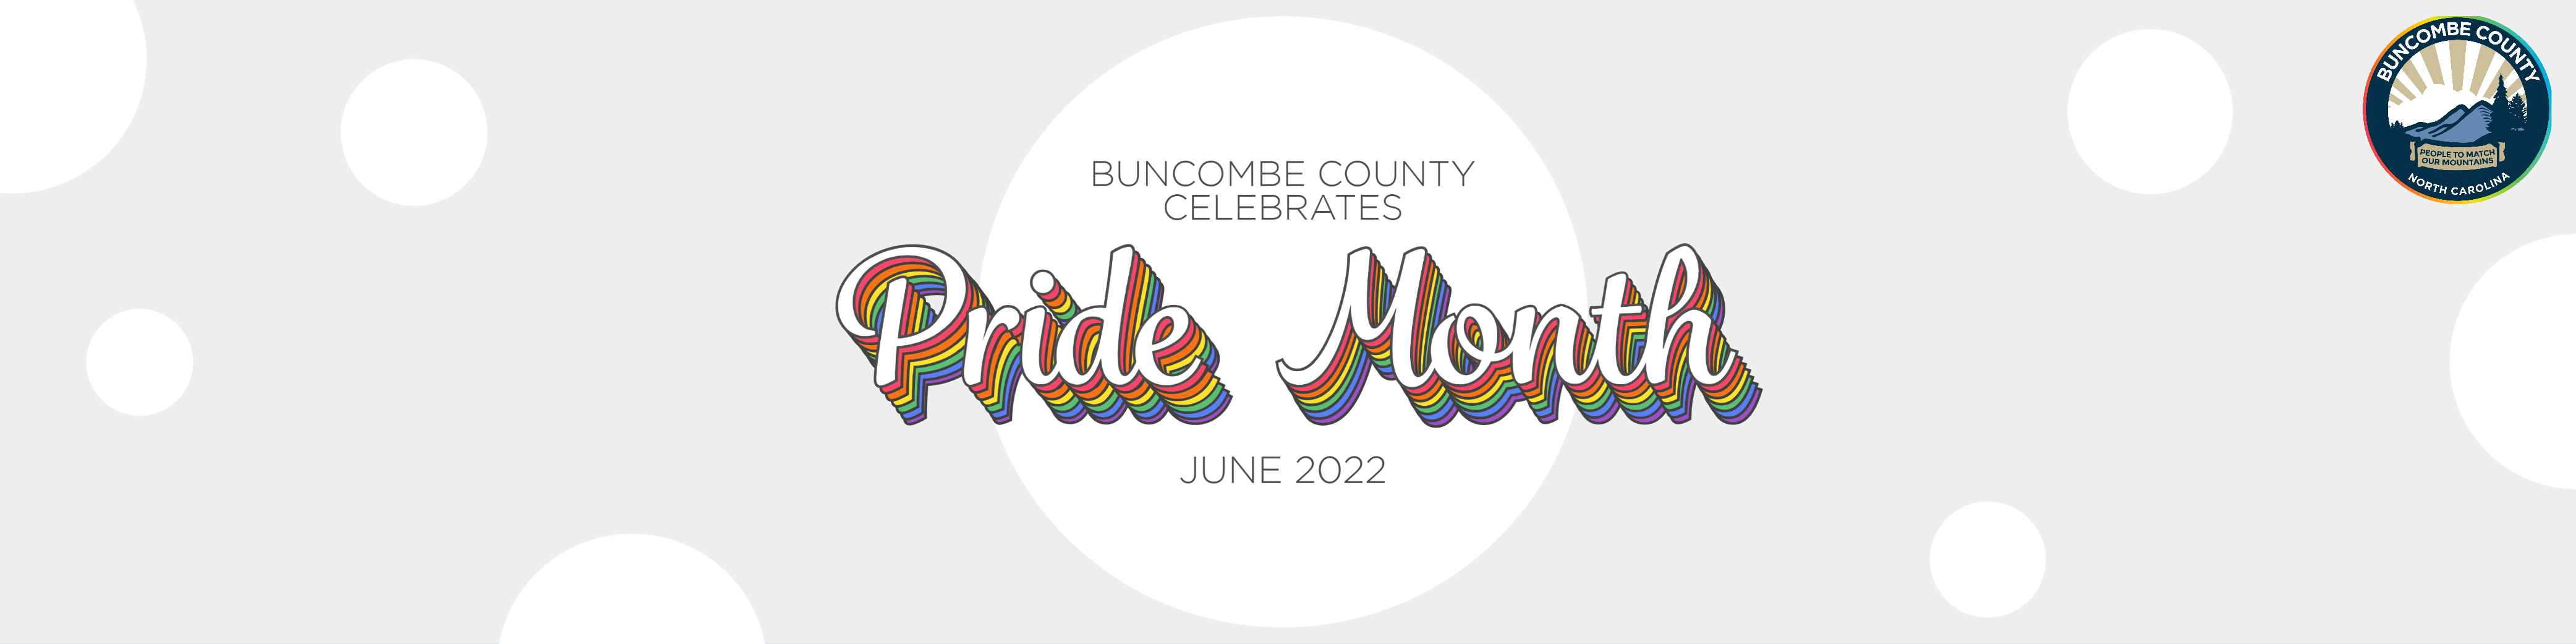 Buncombe County Celebrates Pride Month in June 2022